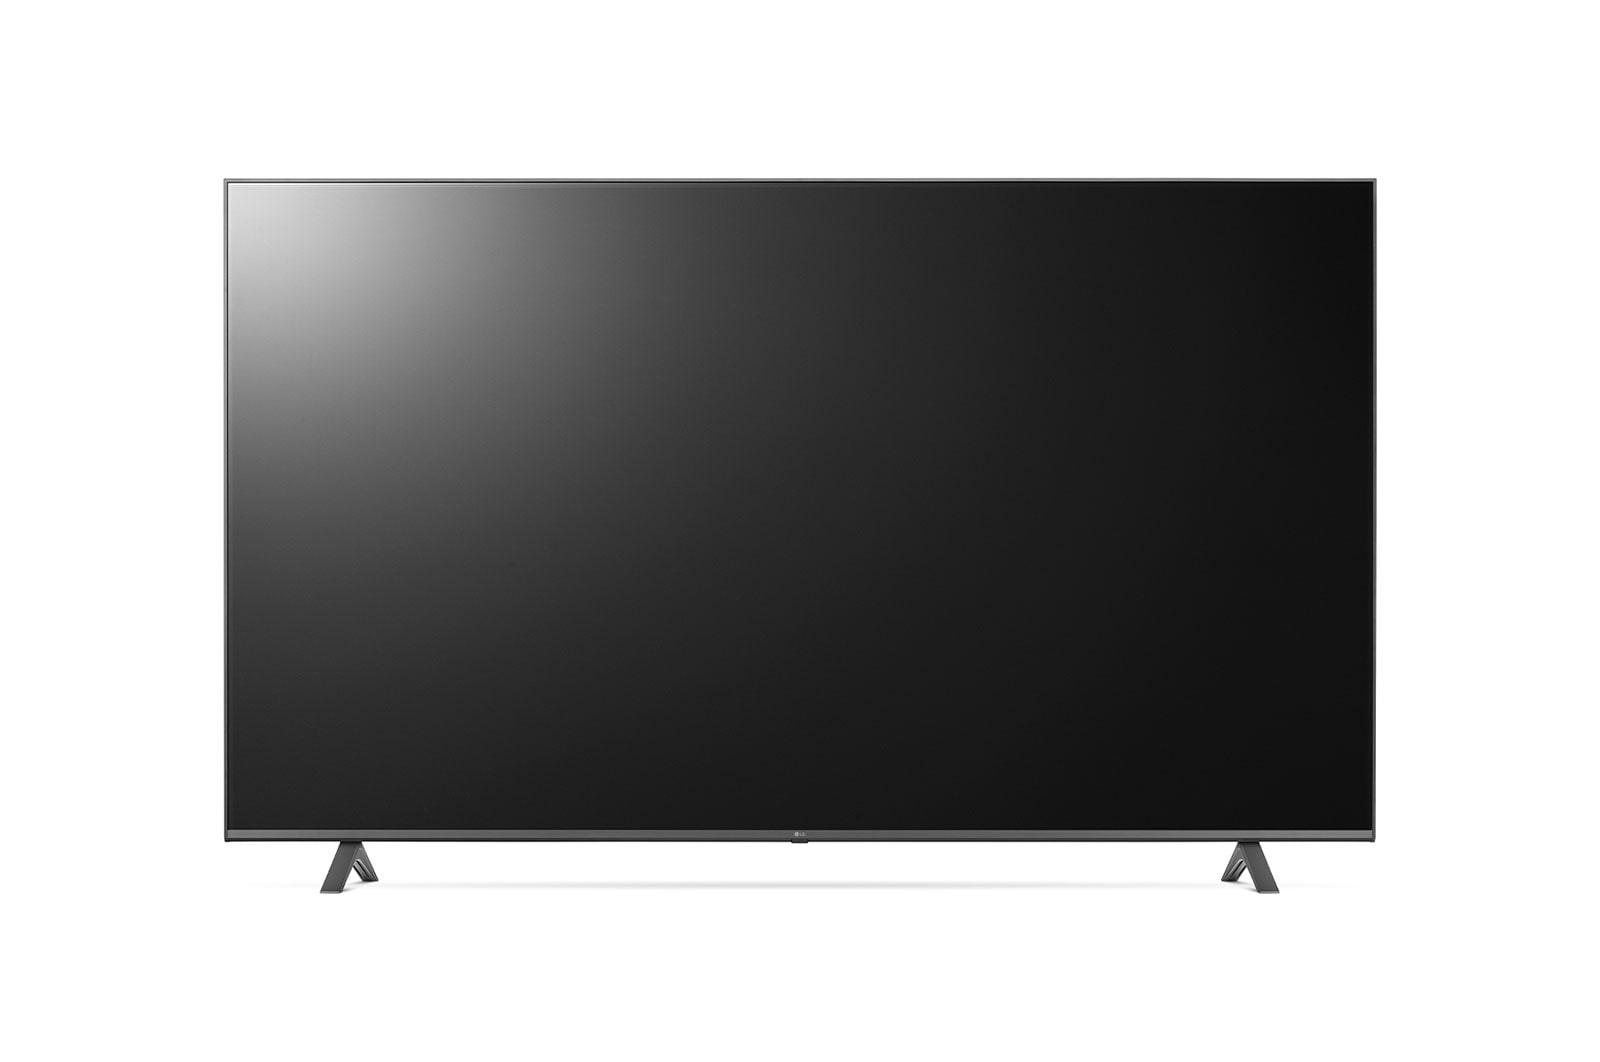 LG UHD 4K TV 75 Inch Series